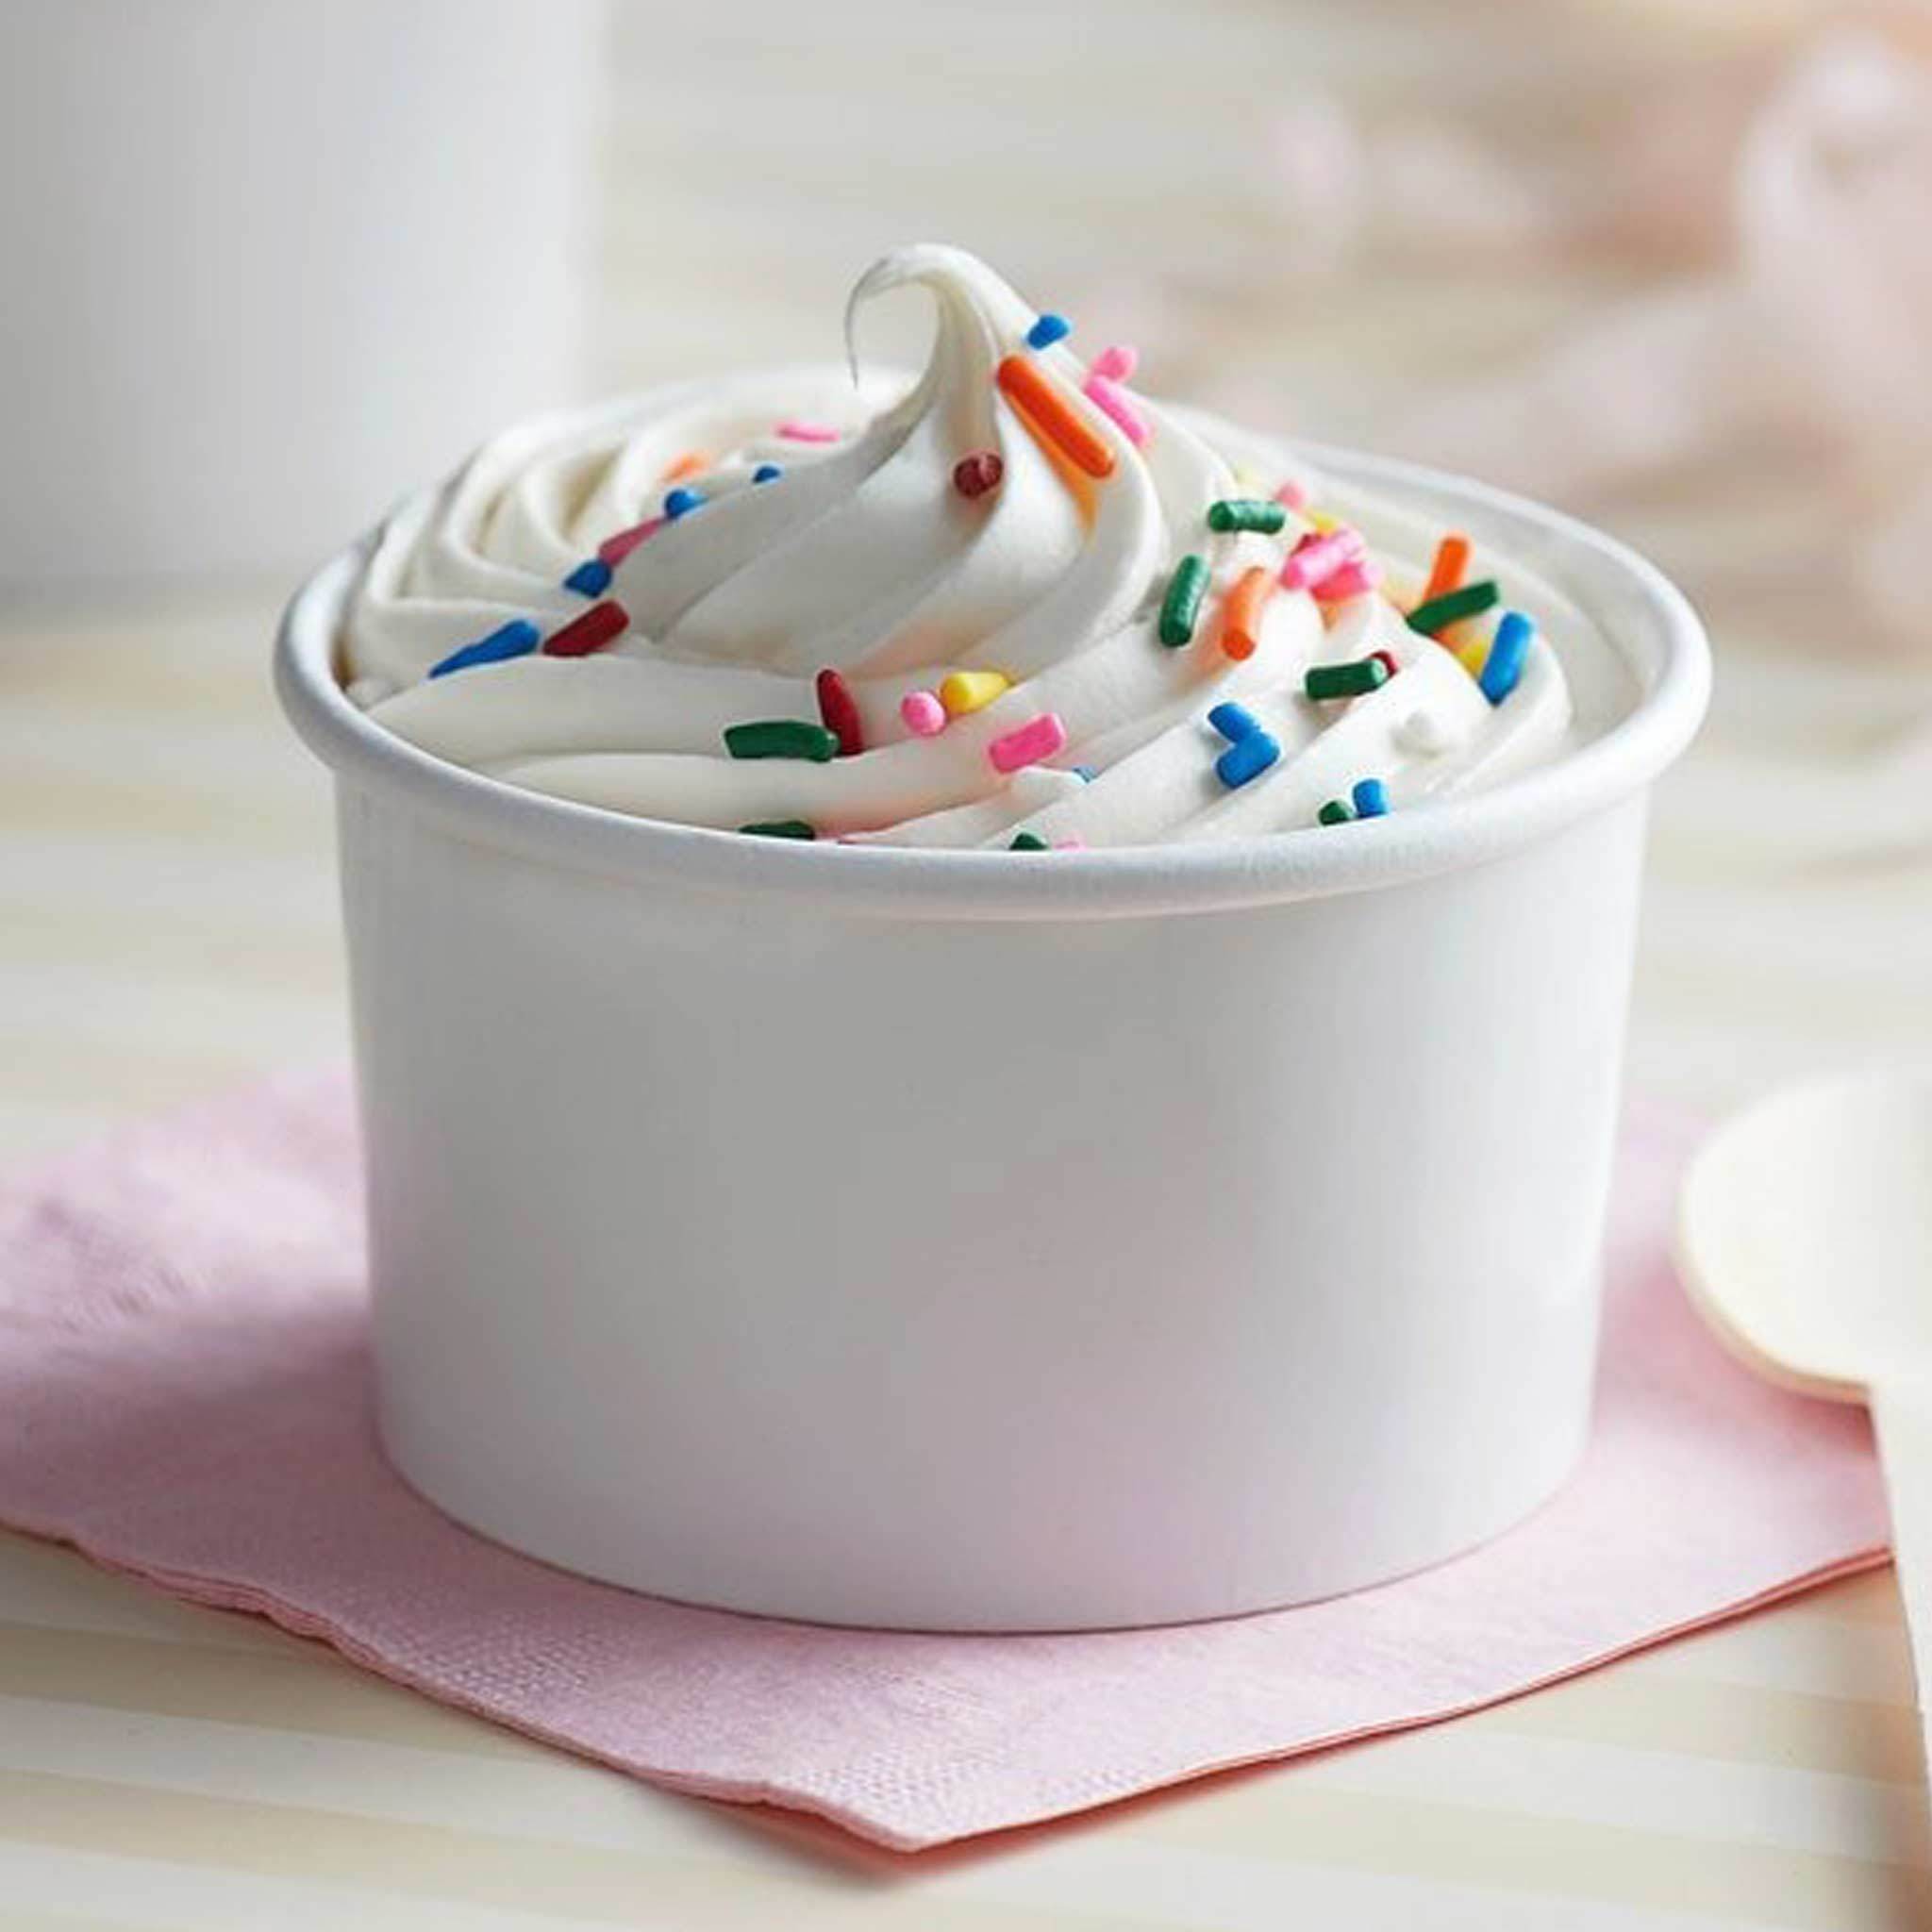 1000 Pieces Paper Ice Cream Cup 120 Ml (4 Oz)